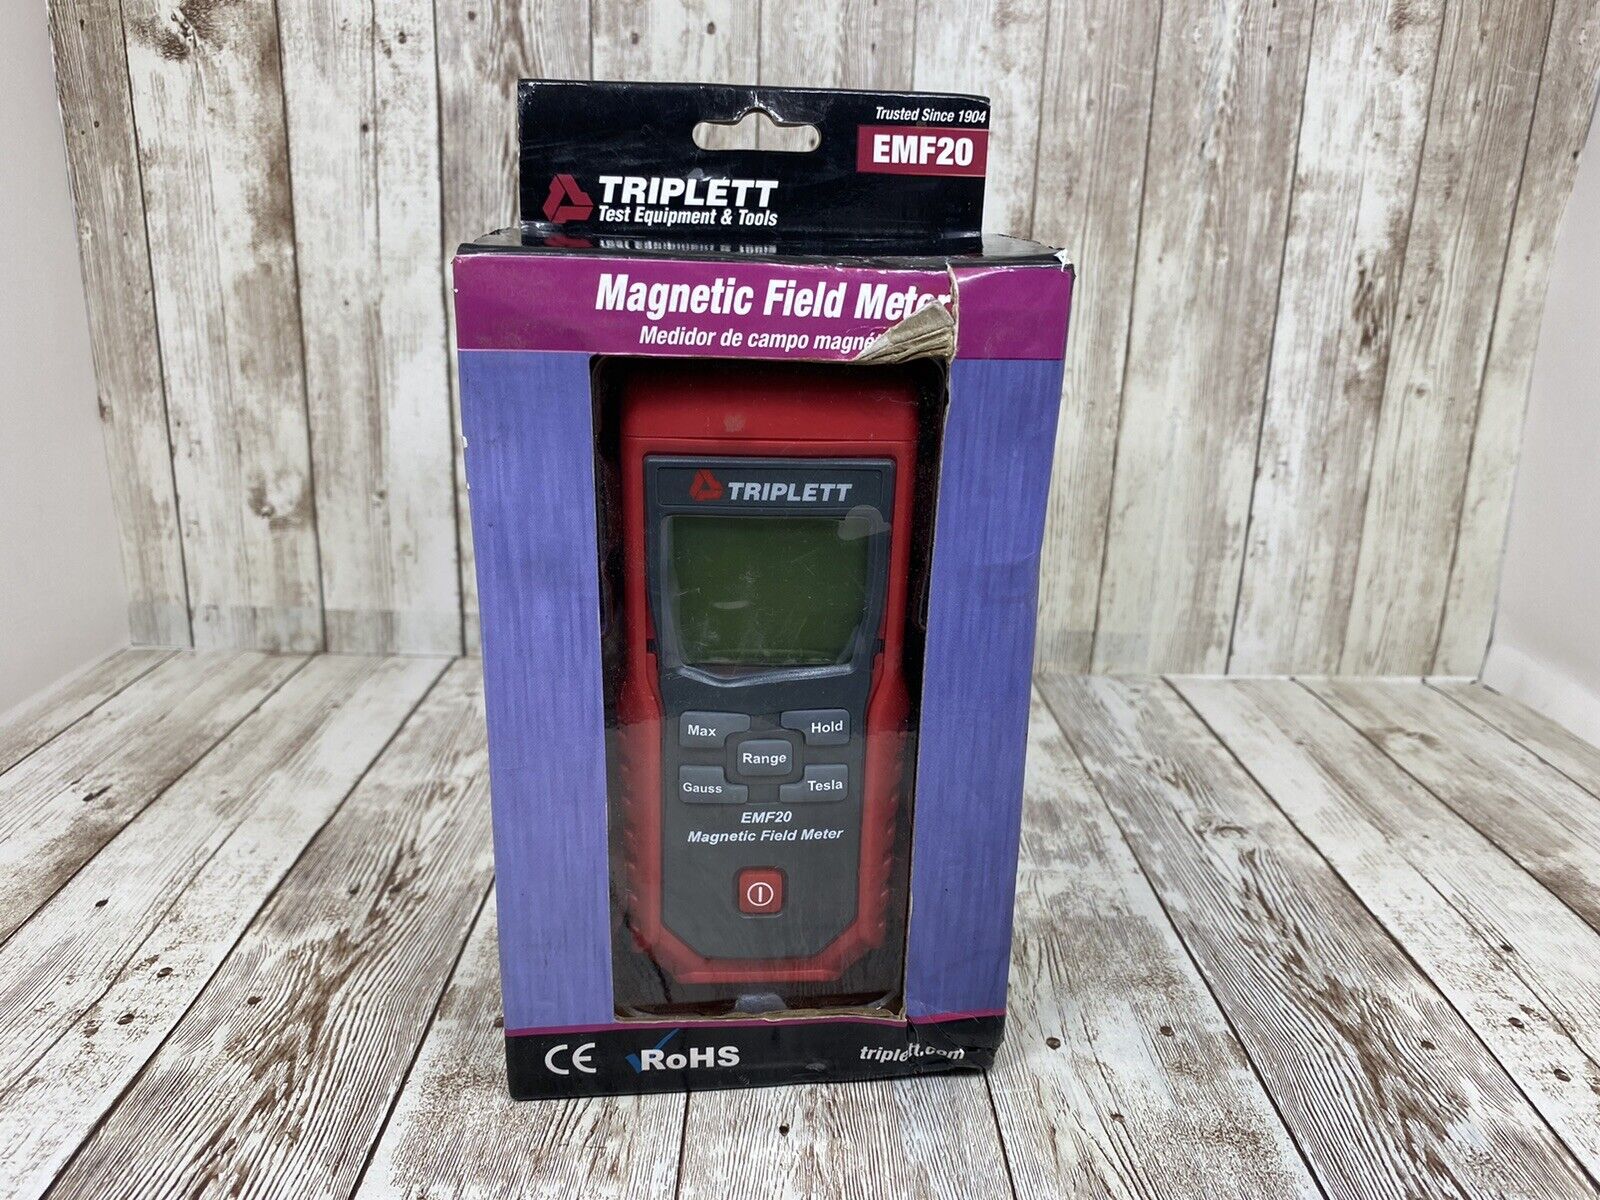 Triplett EMF20 Magnetic Field Meter Test Equipment & Tools New In box Unused